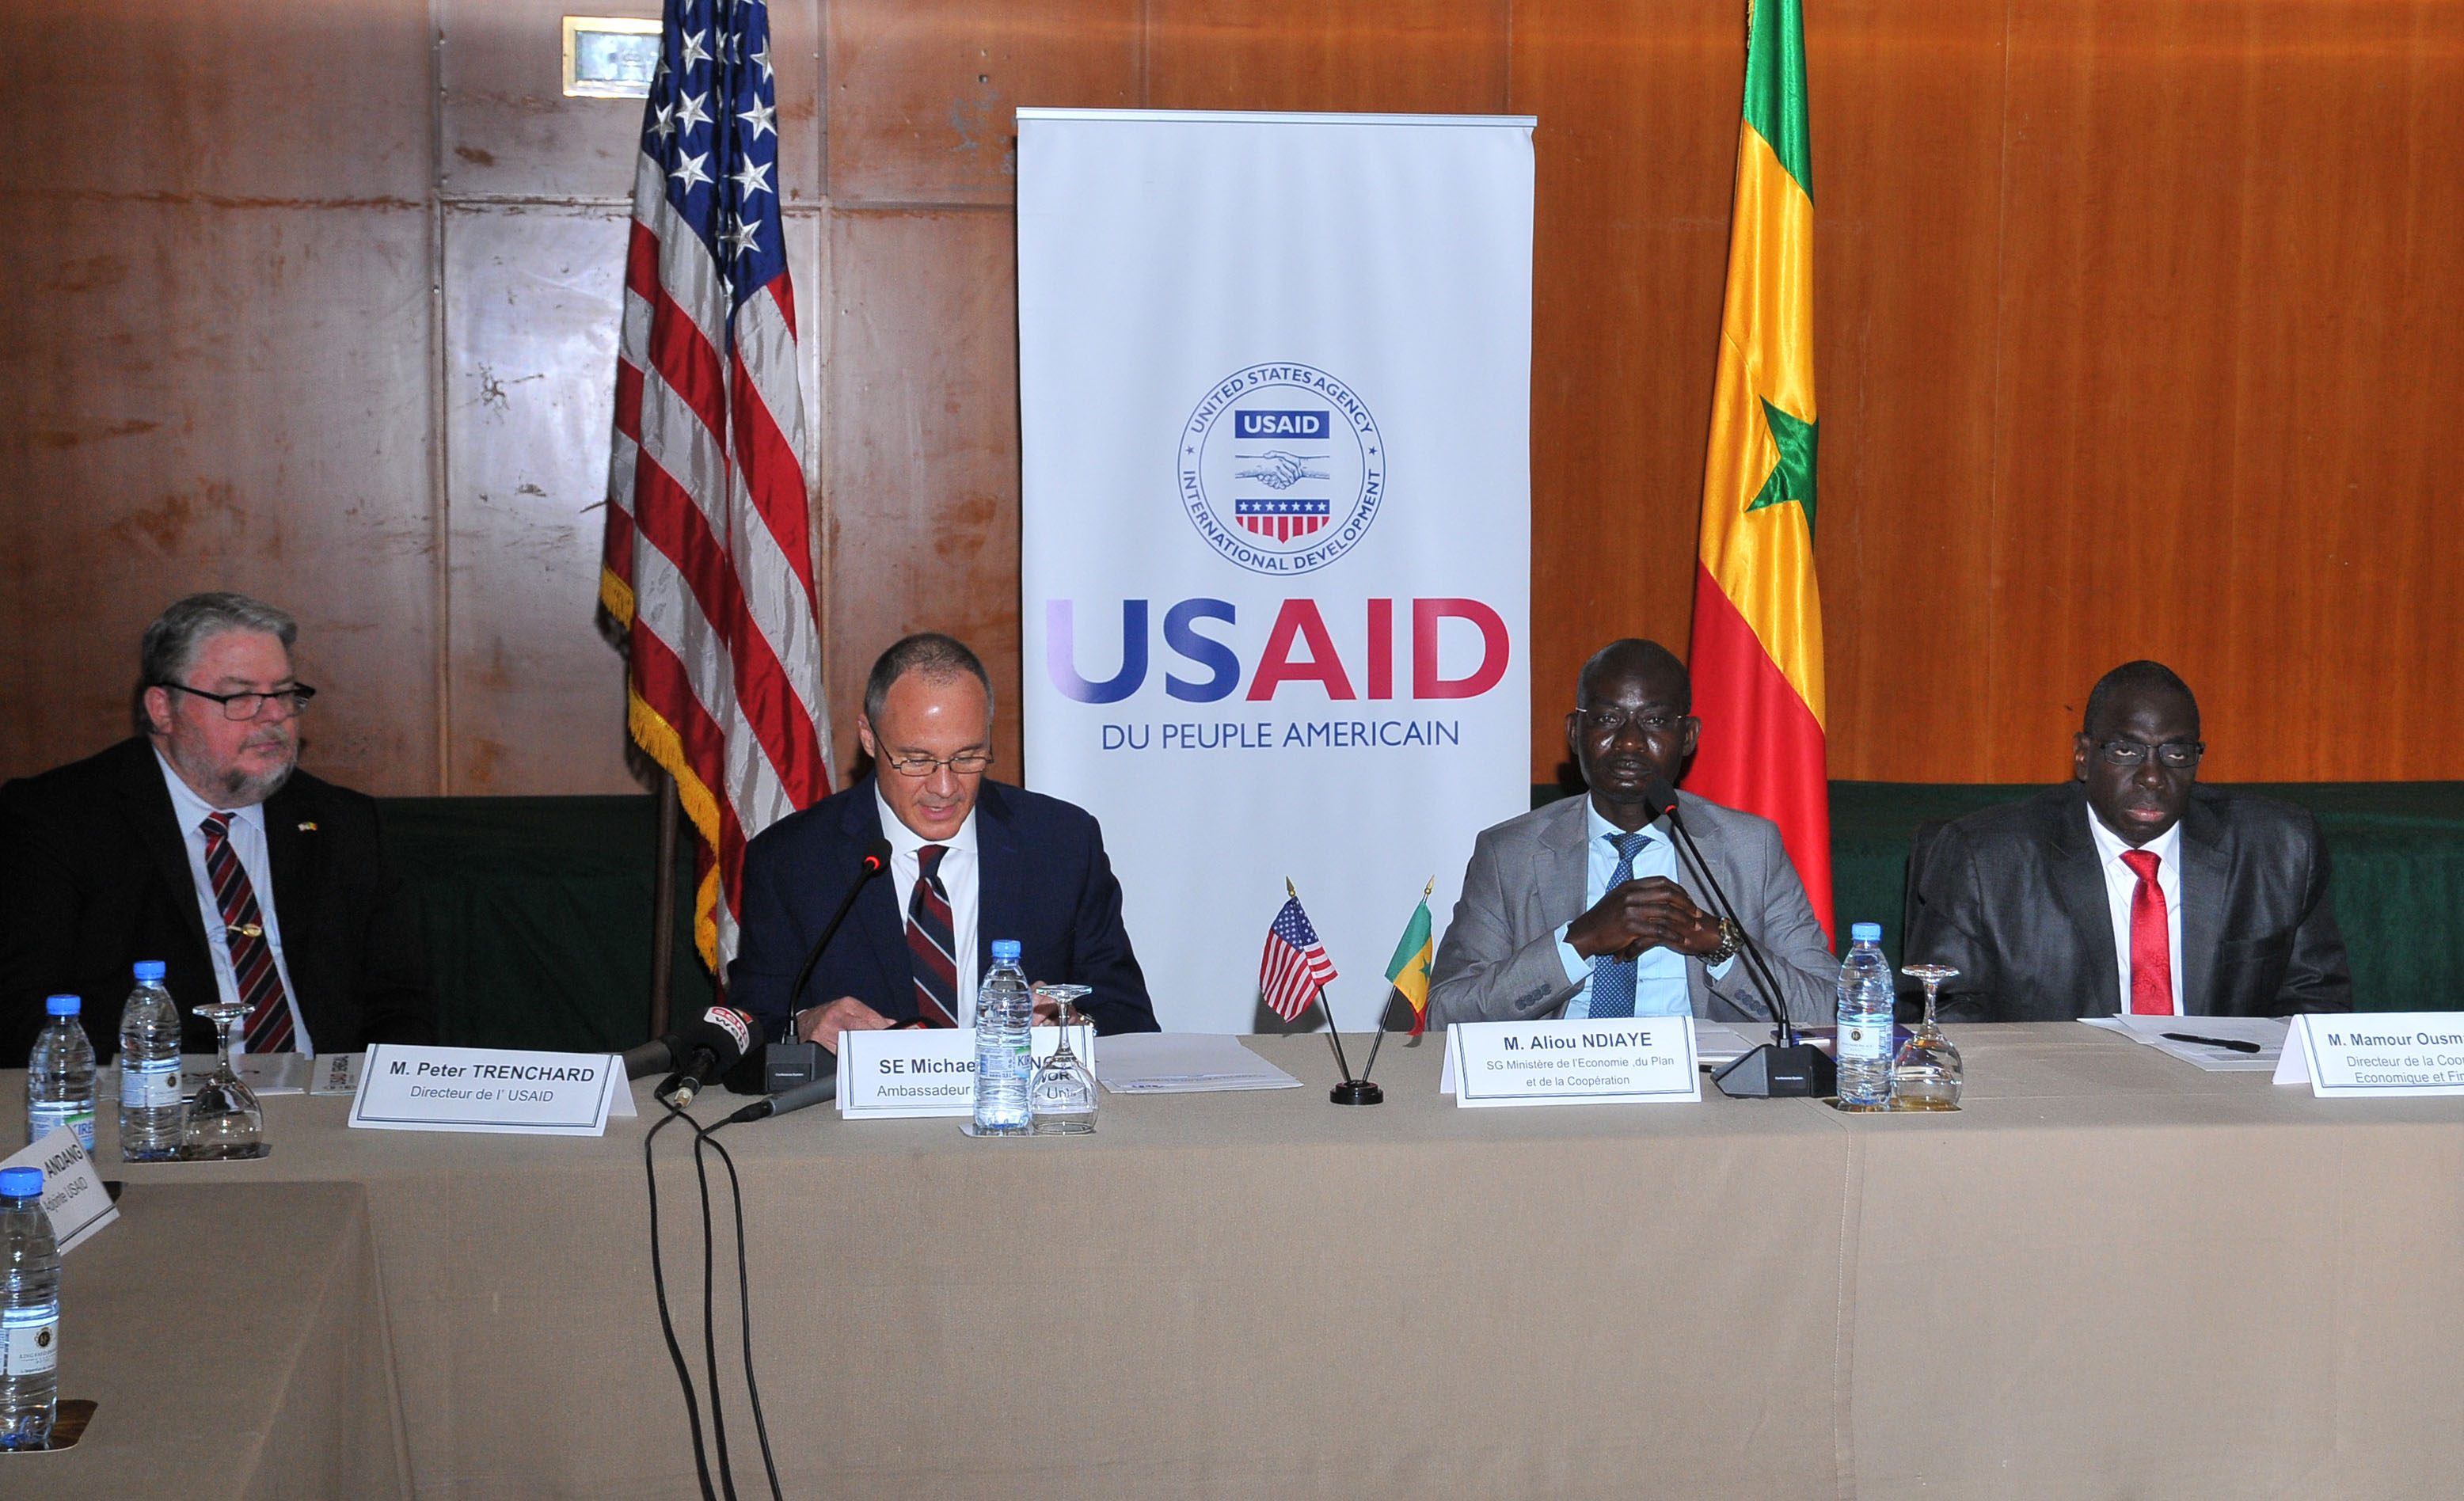 Sénégal-Etats-Unis : L’ambassadeur Mickael Raynor passe en revue l’état de la coopération